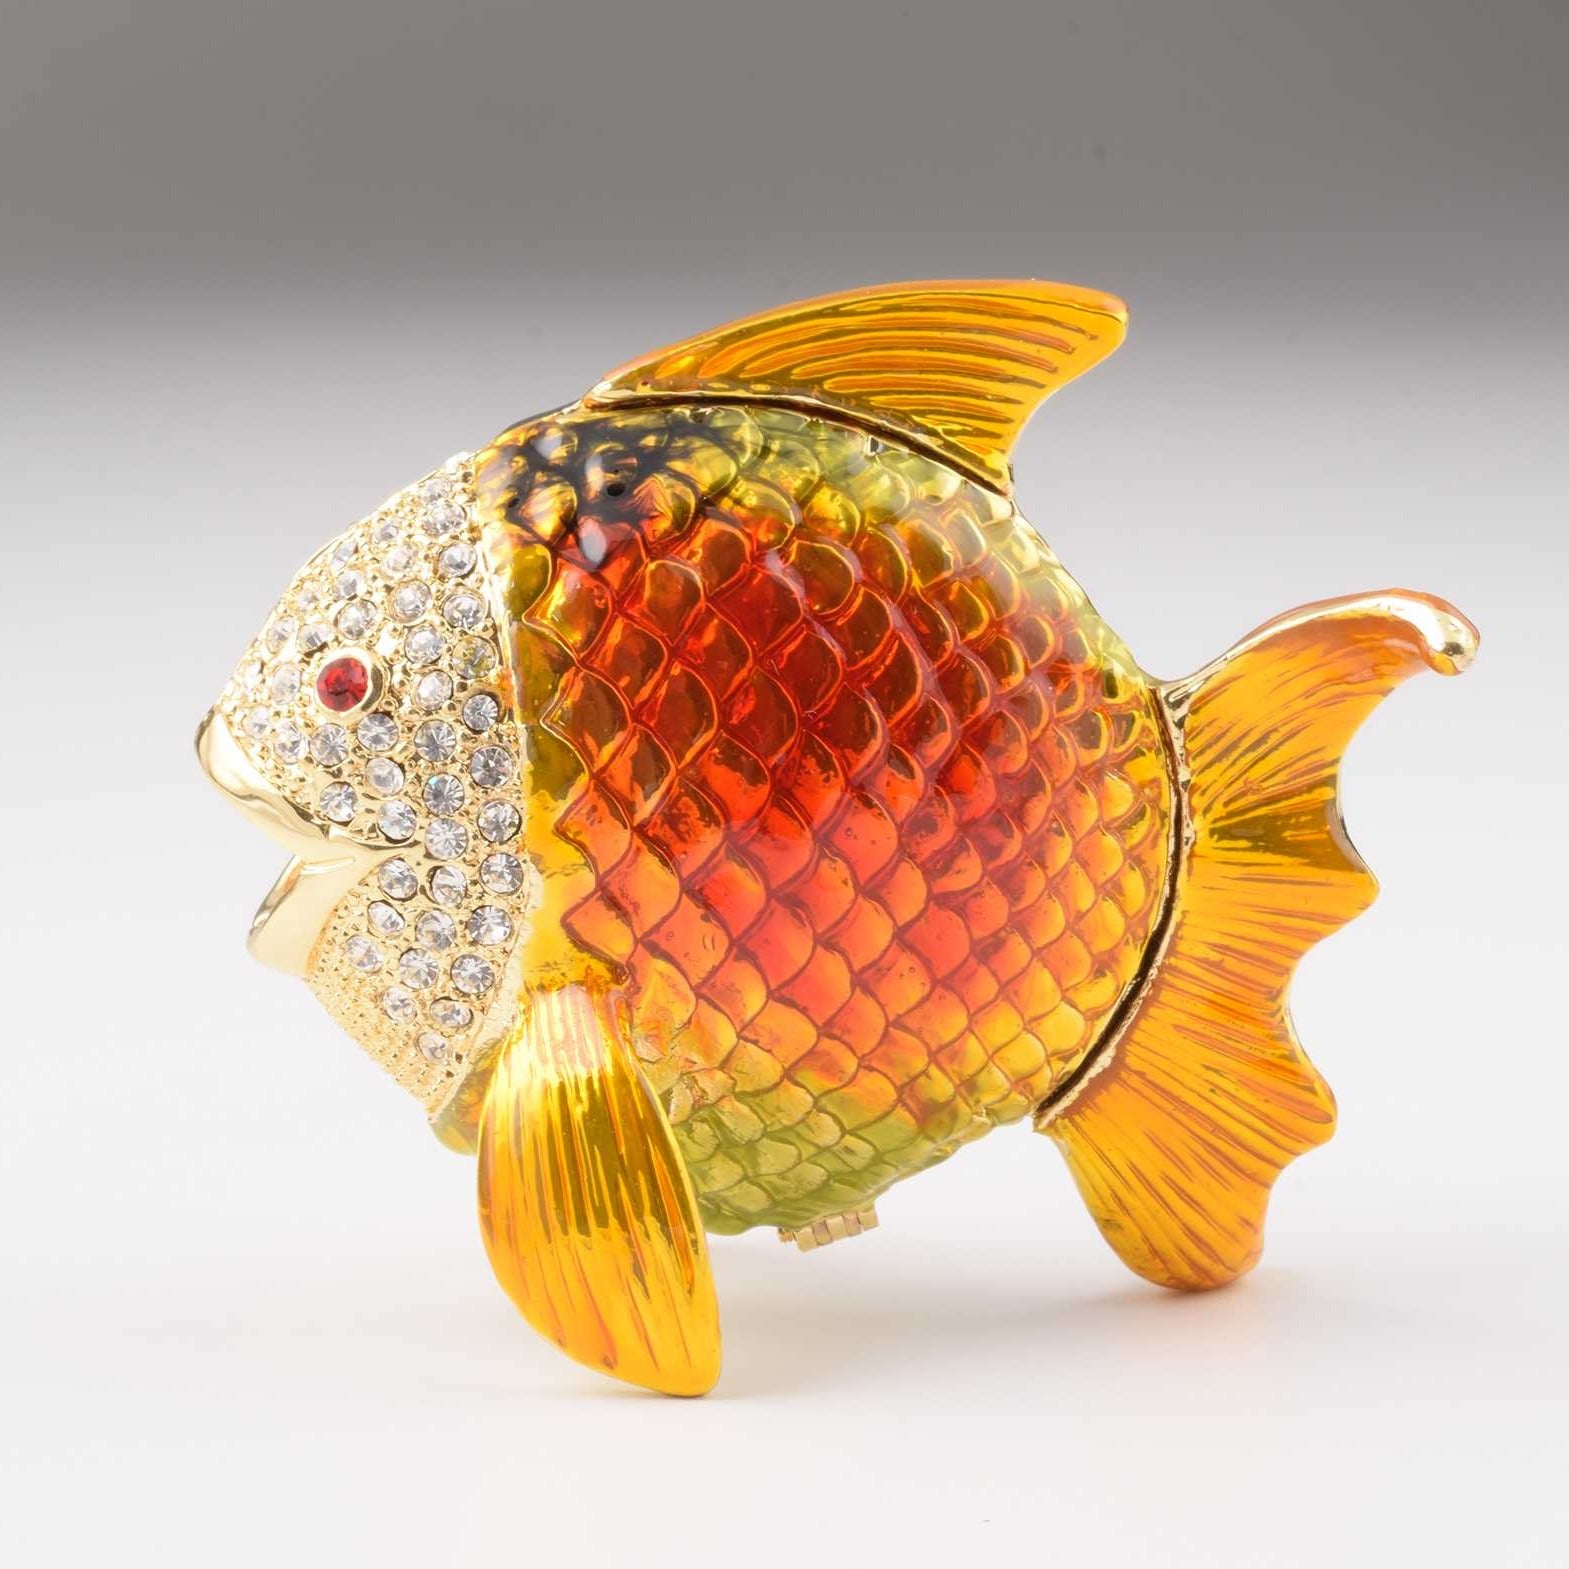 Keren Kopal Gold Fish  64.00